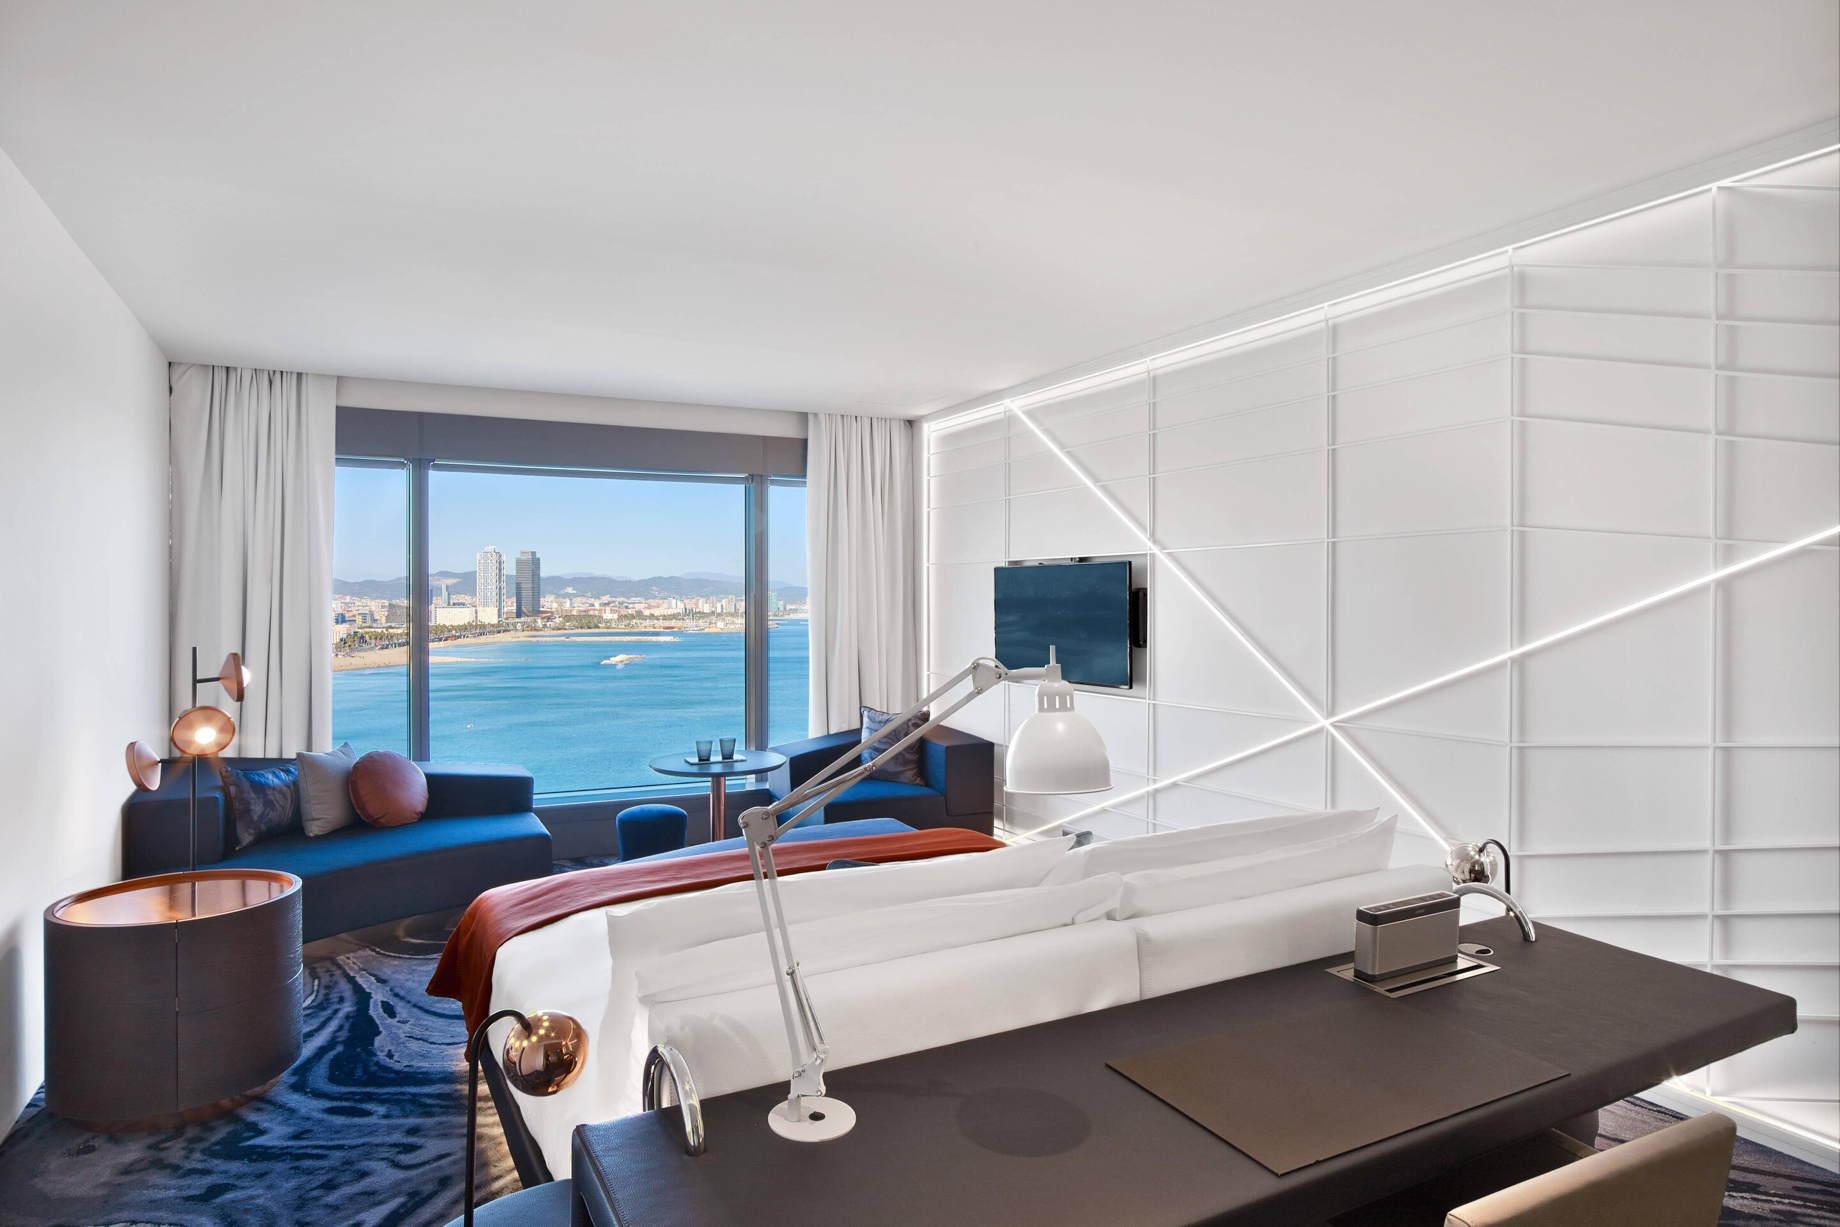 W Barcelona Hotel – Barcelona, Spain – Fabulous Sky Guest Room View